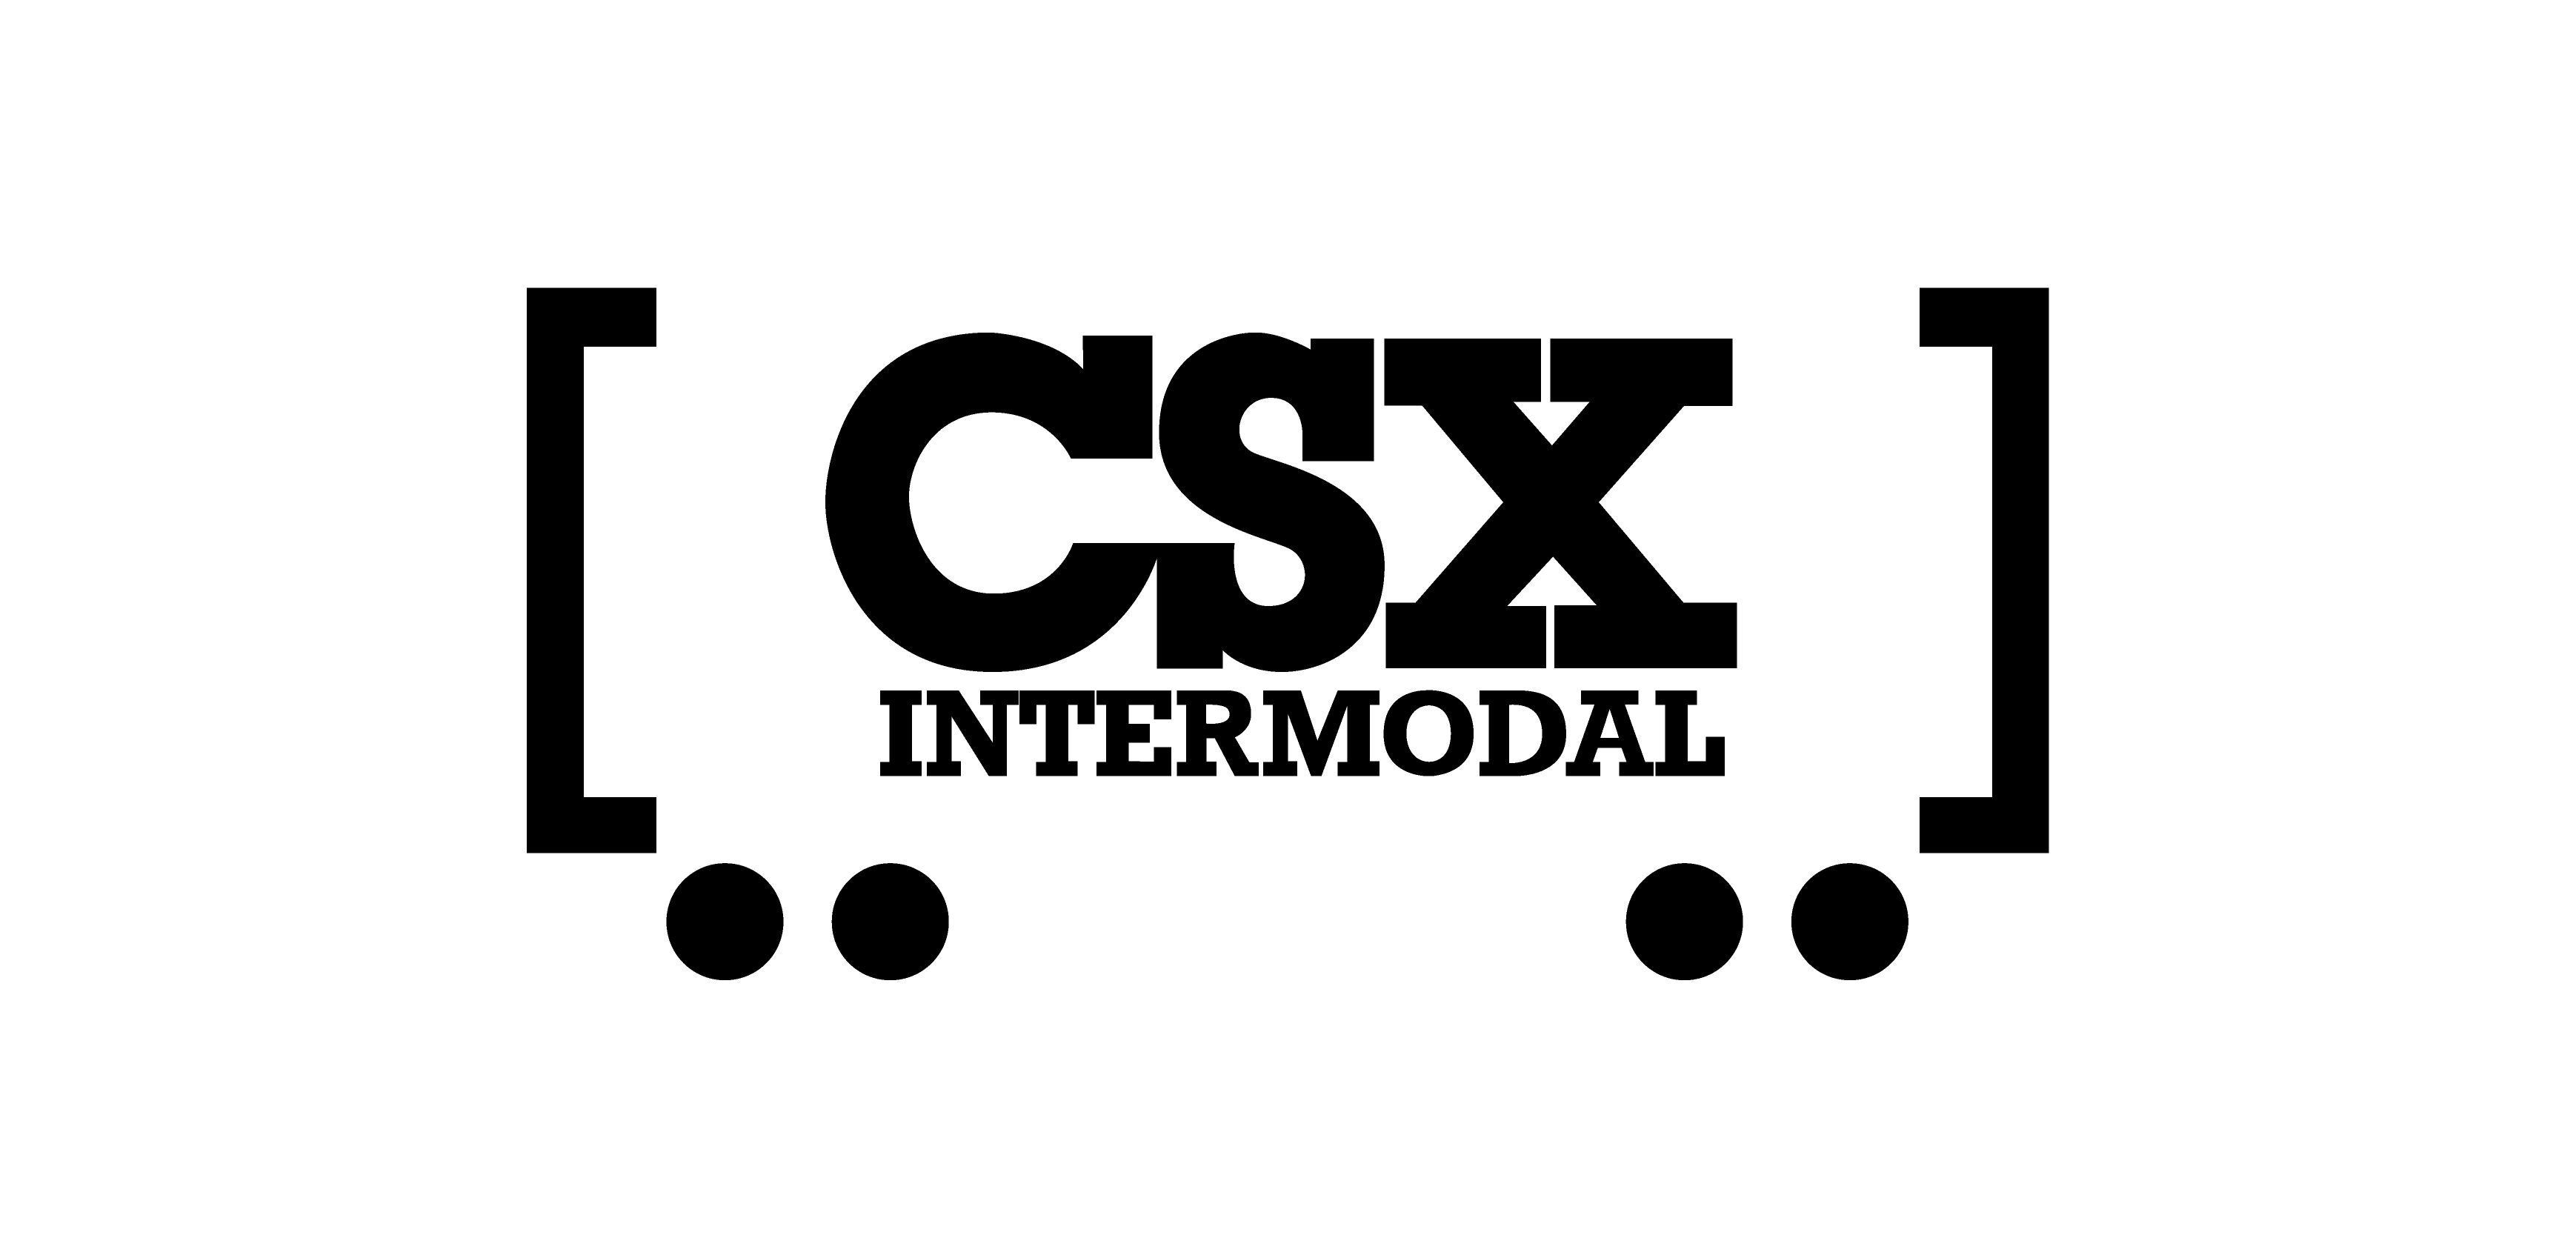 CSX Intermodal